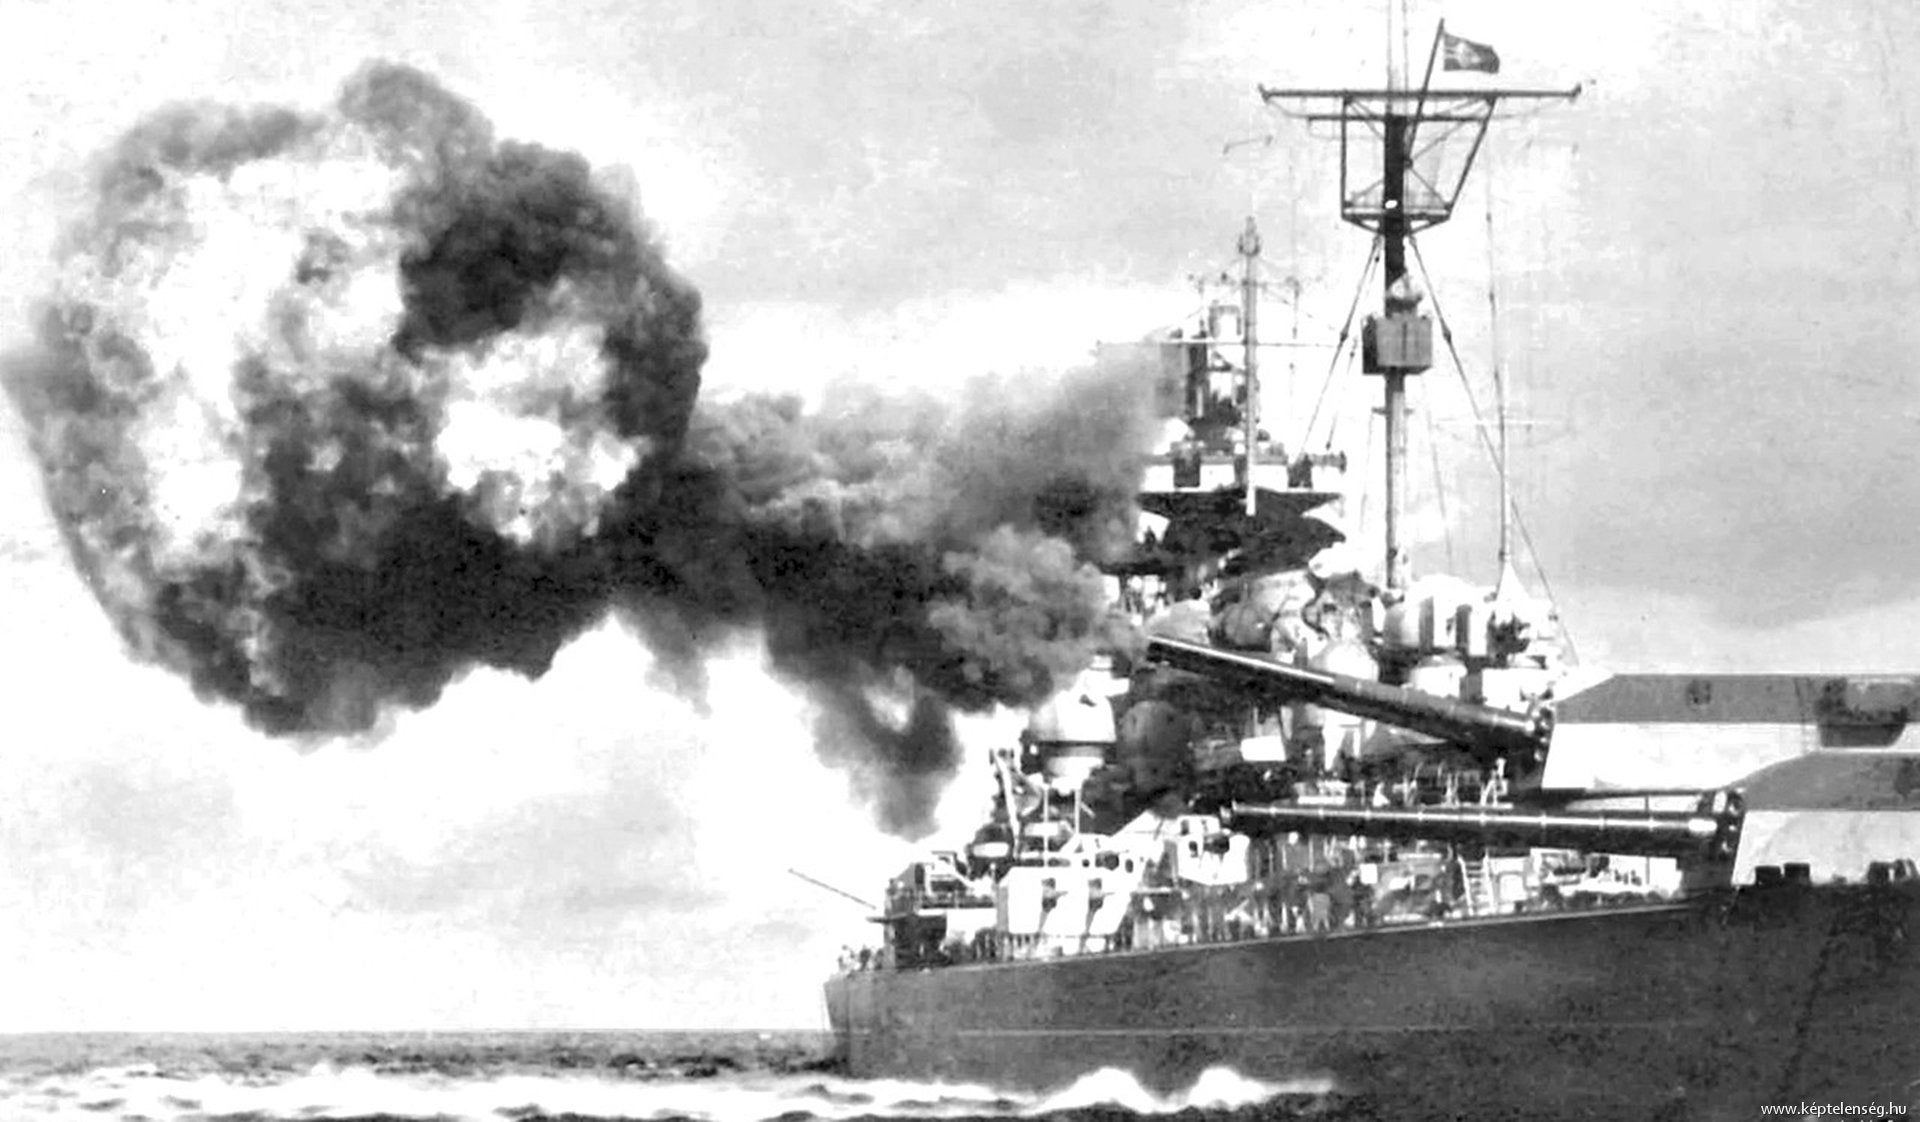 German battleship Tirpitz firing in the Baltic Sea, 1941 [920 x 122]